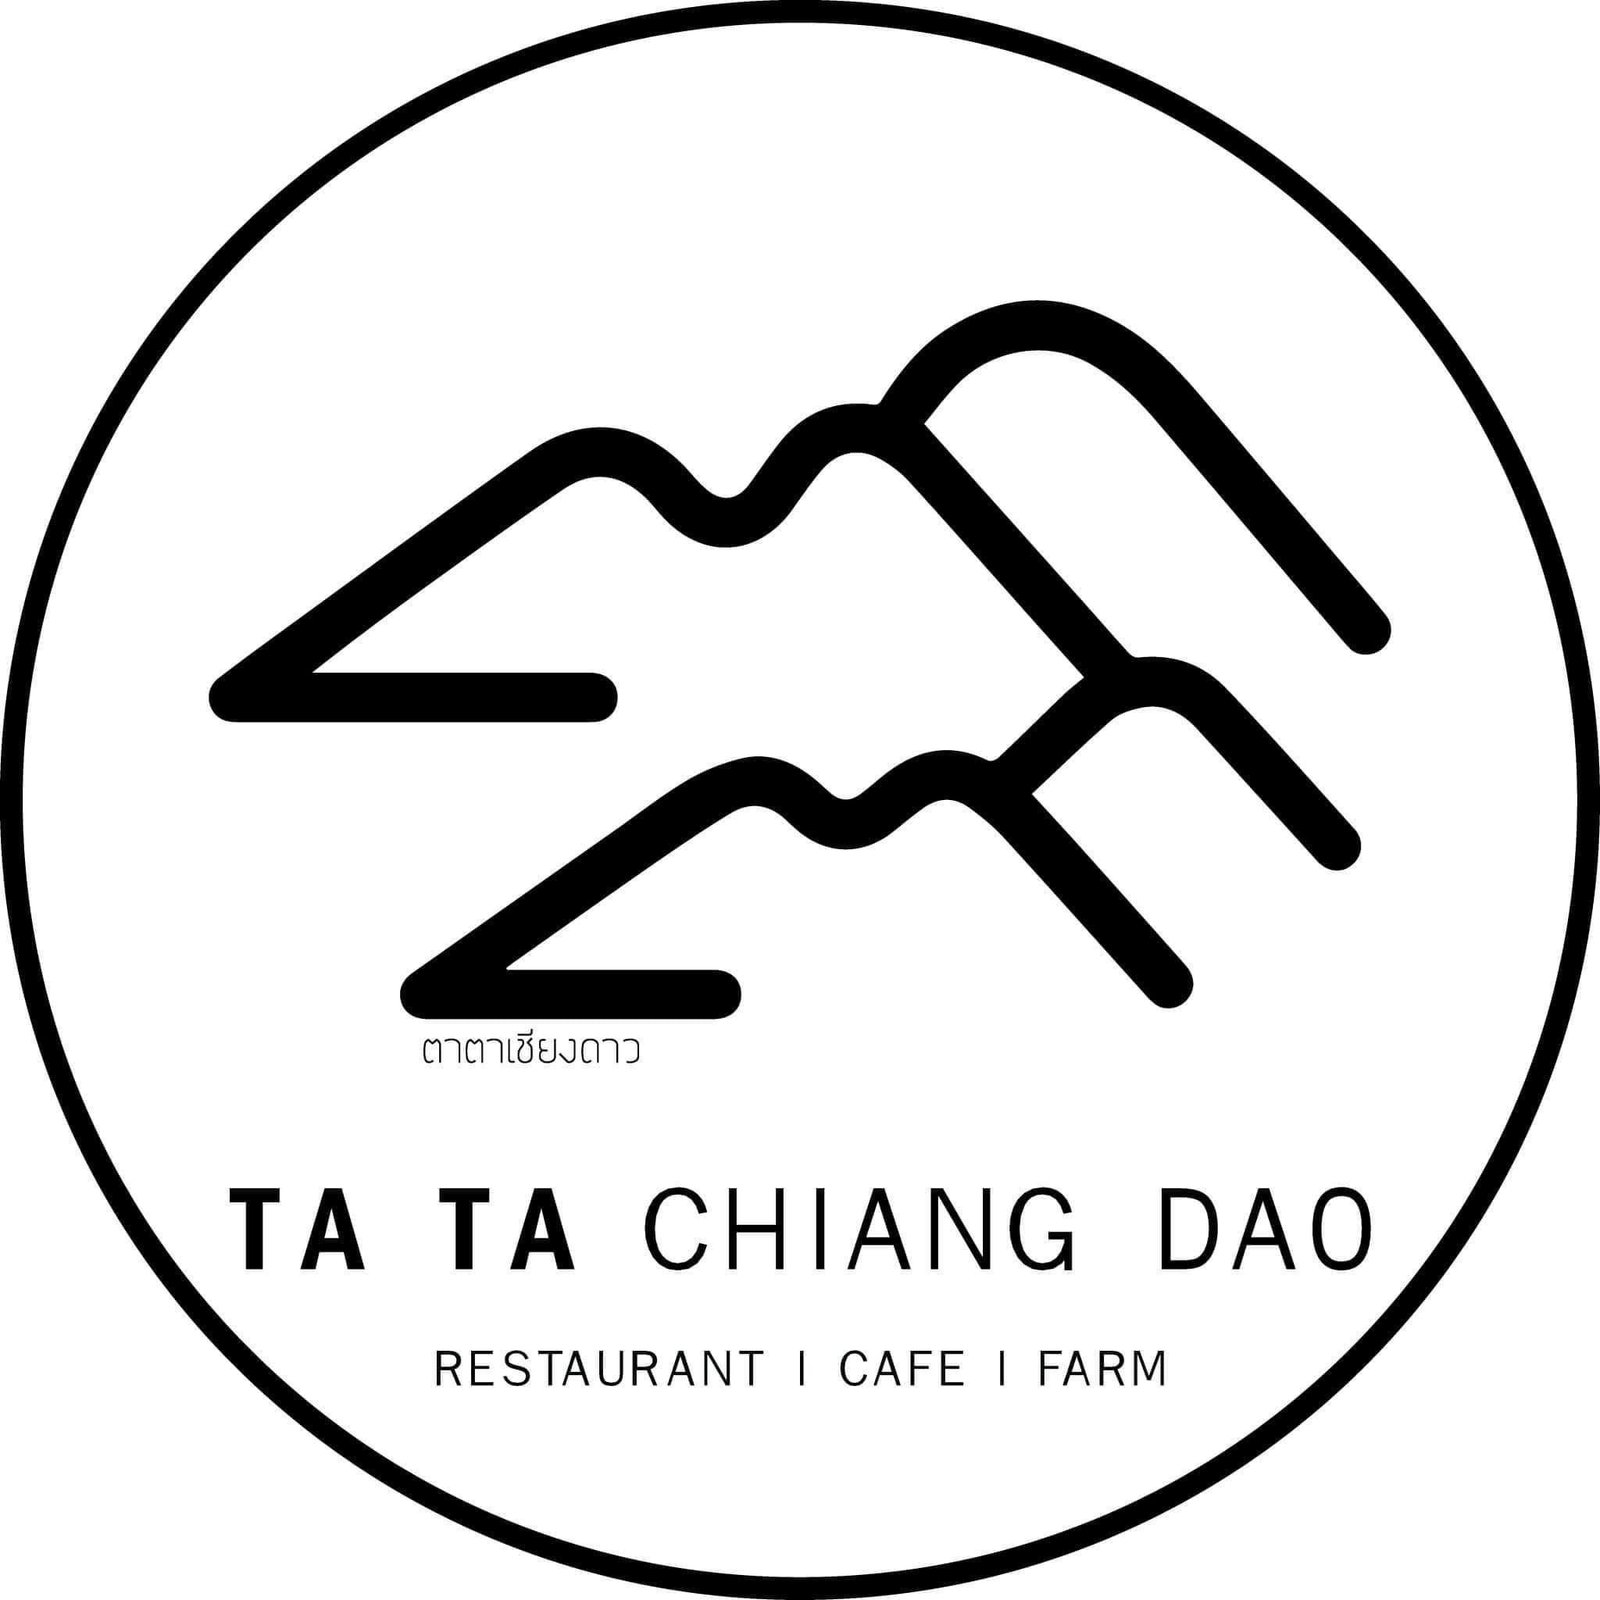 TATA Chiang Dao Cafe, Restaurant, and Farm